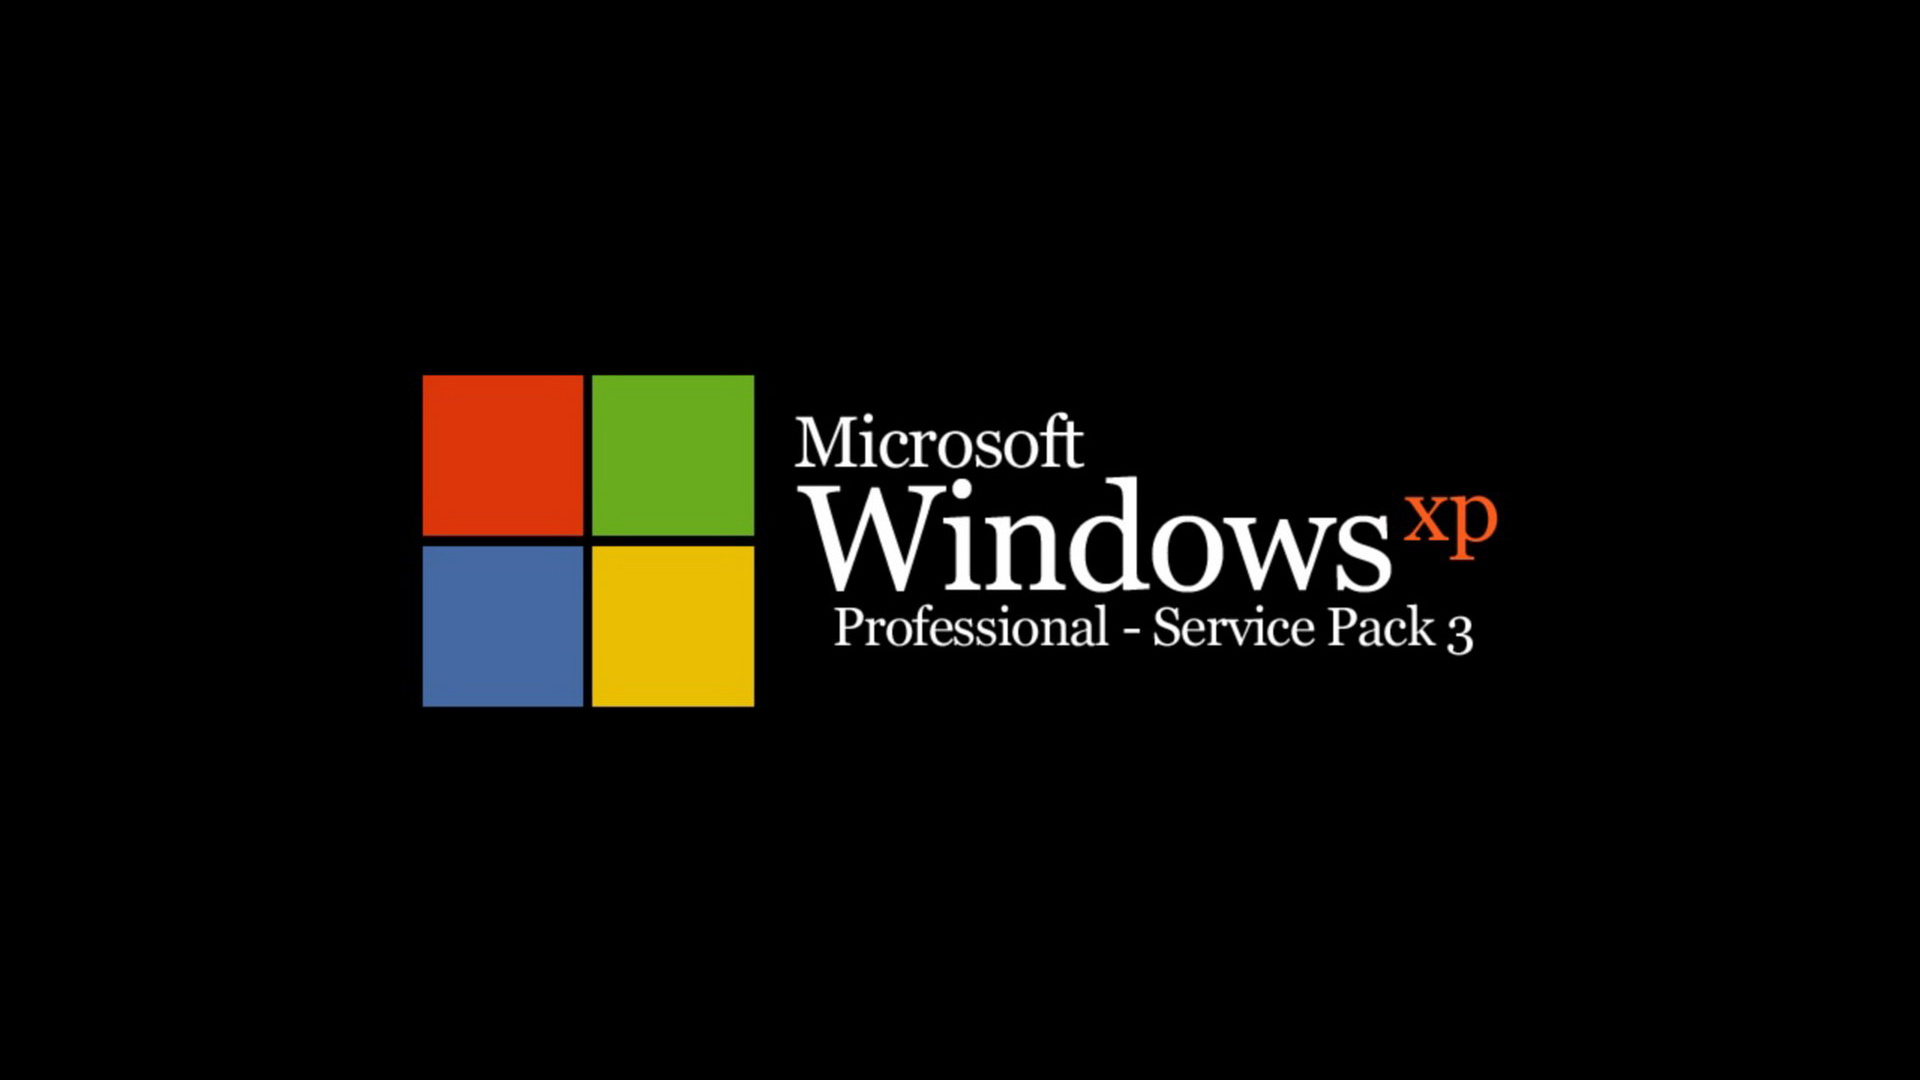 Windows Xp, Microsoft Windows, Logo, Texte, Graphisme. Wallpaper in 1920x1080 Resolution